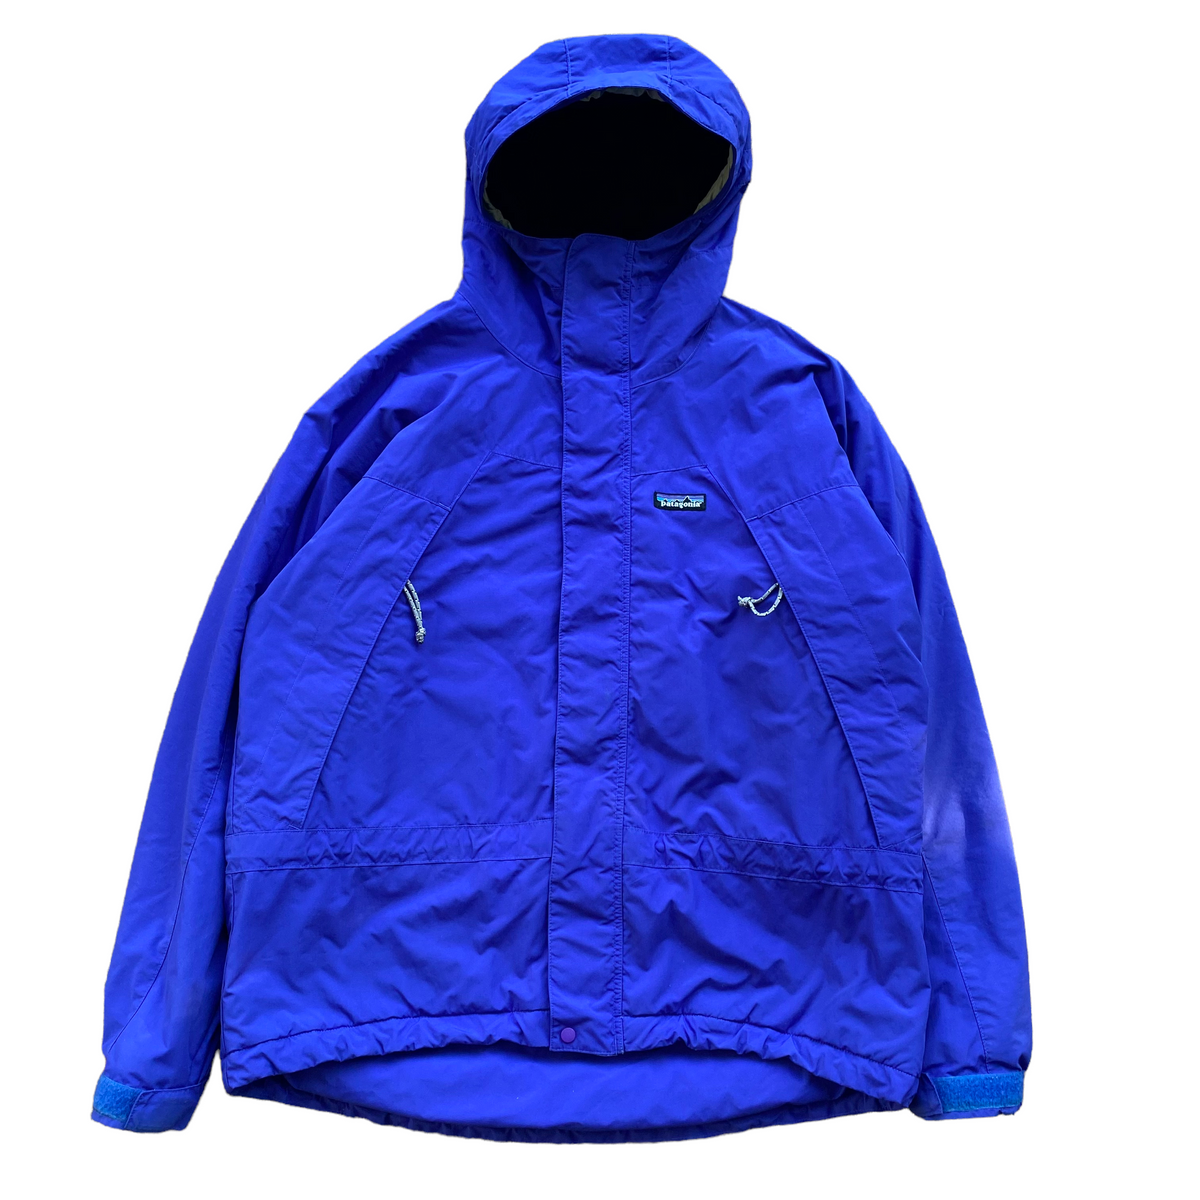 Spring 2000 Patagonia fleece lined jacket. Medium – Vintage Sponsor